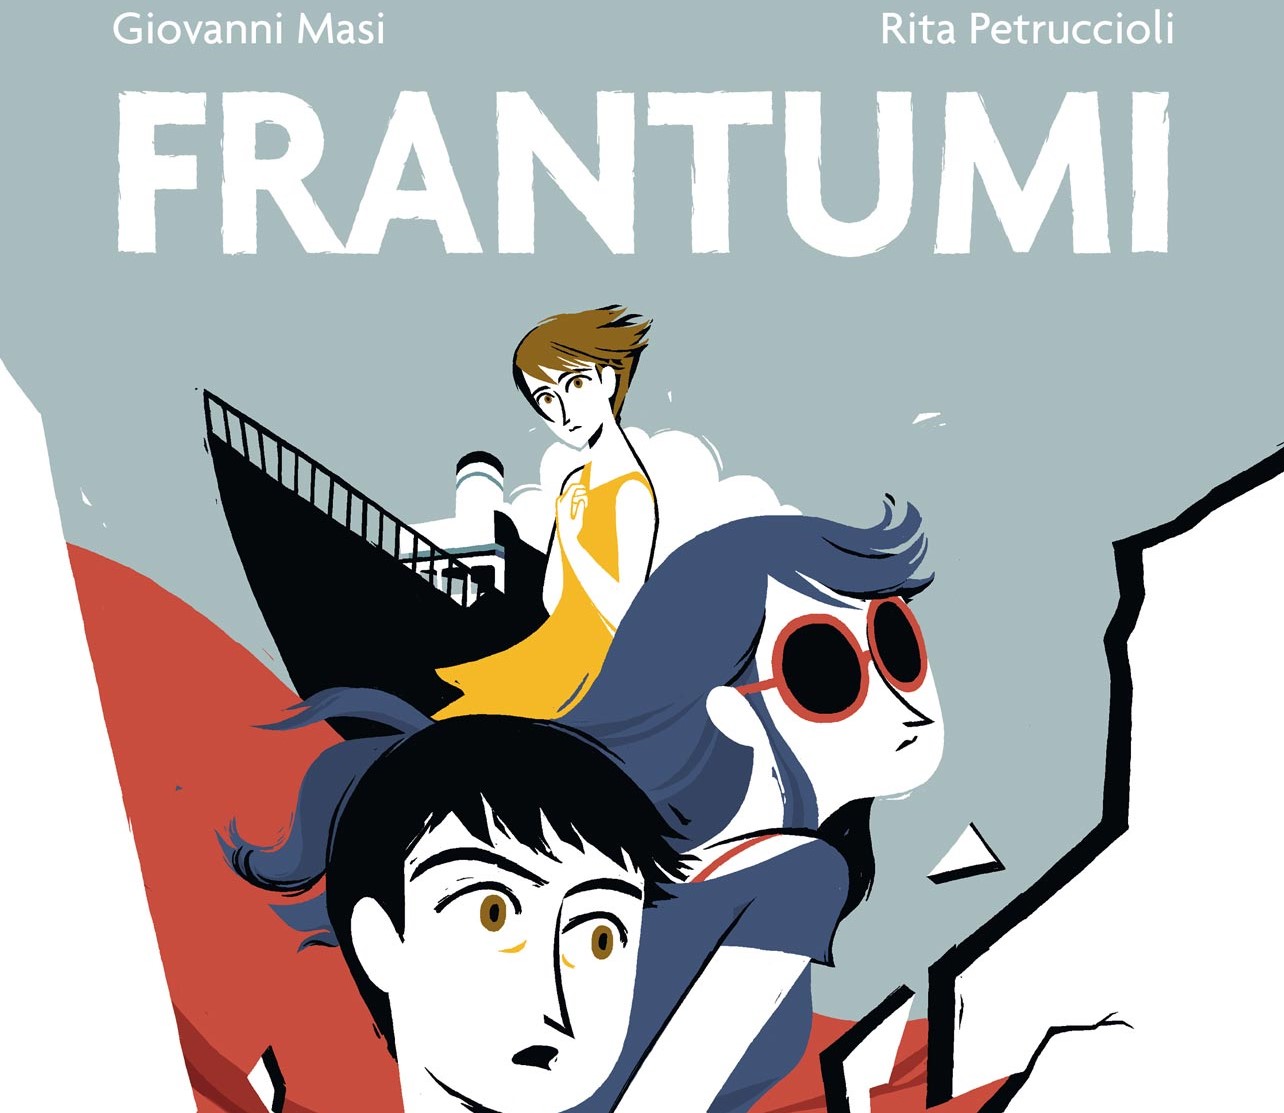 Frantumi Book Cover